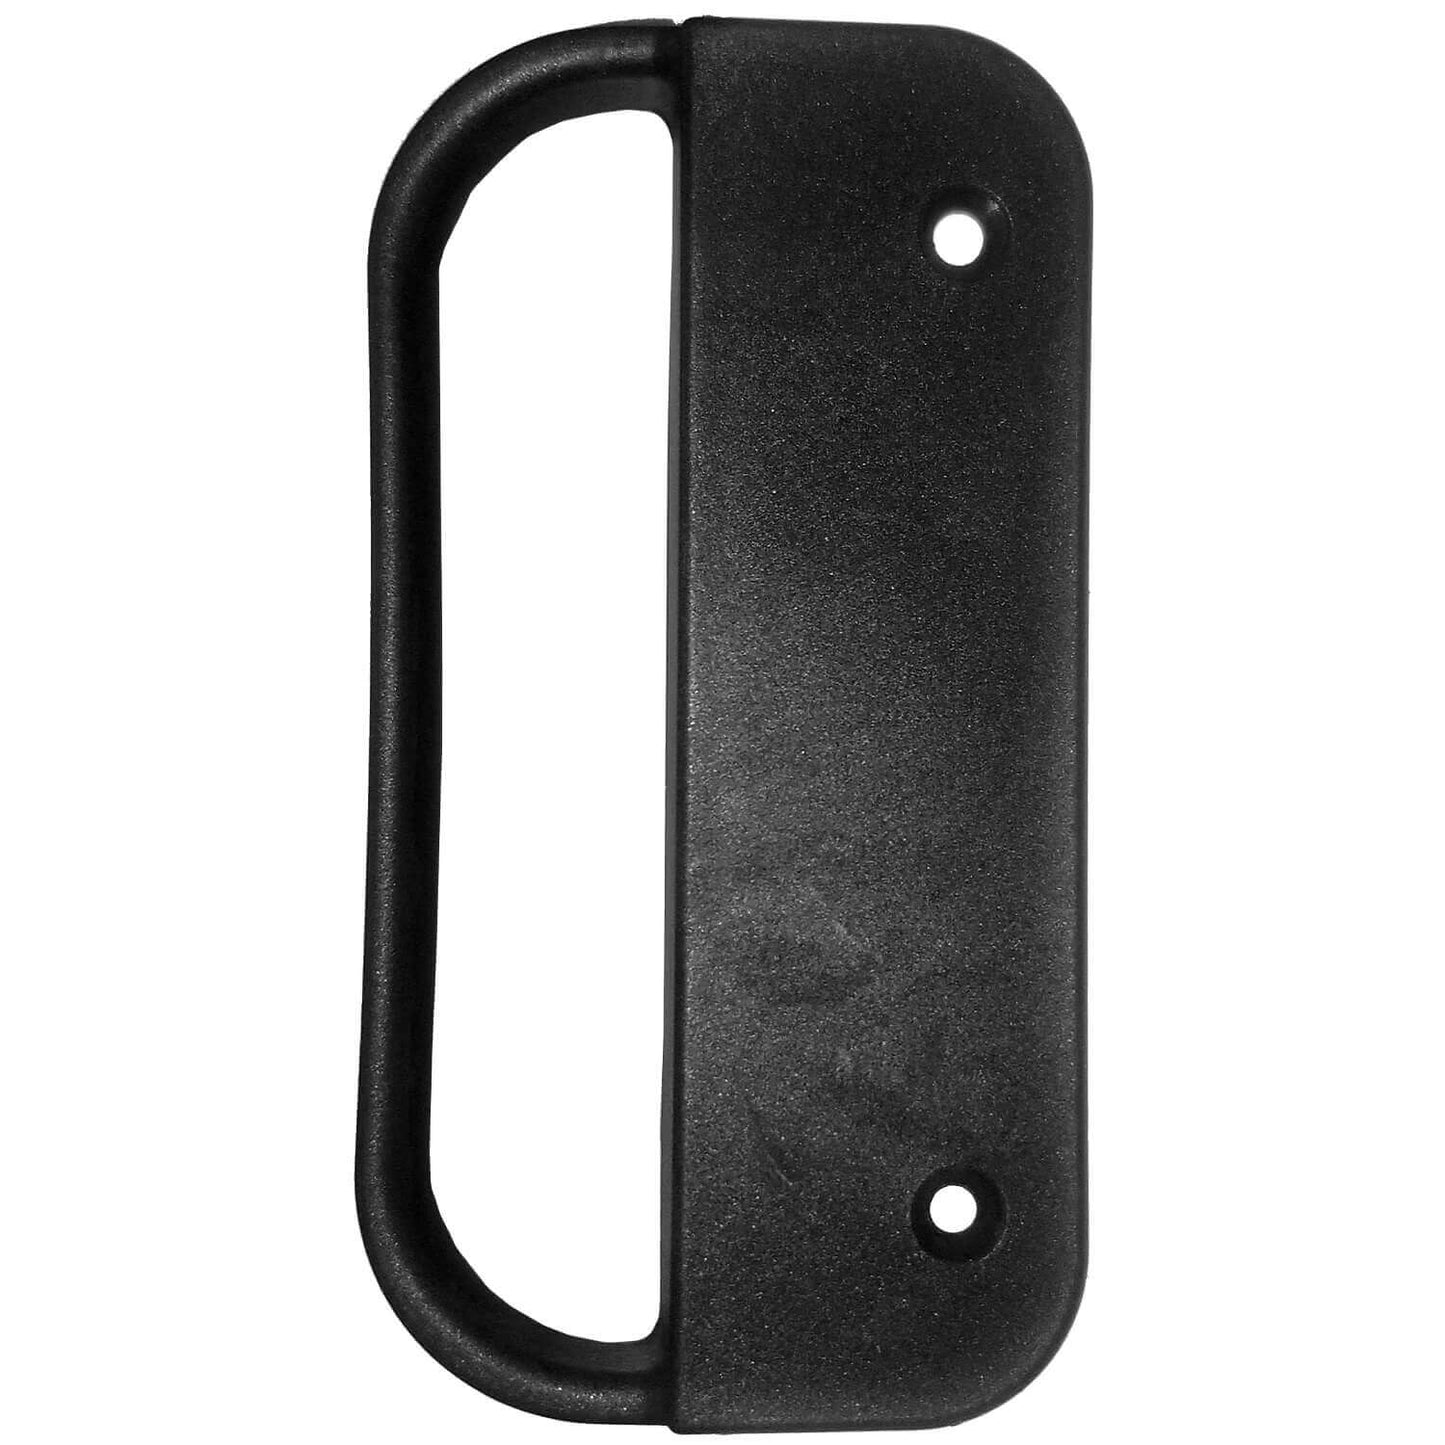 Universal NYLON GATE HANDLE -BLACK: Pull works with Wood, Metal, or Vinyl gates. (1 PACK)